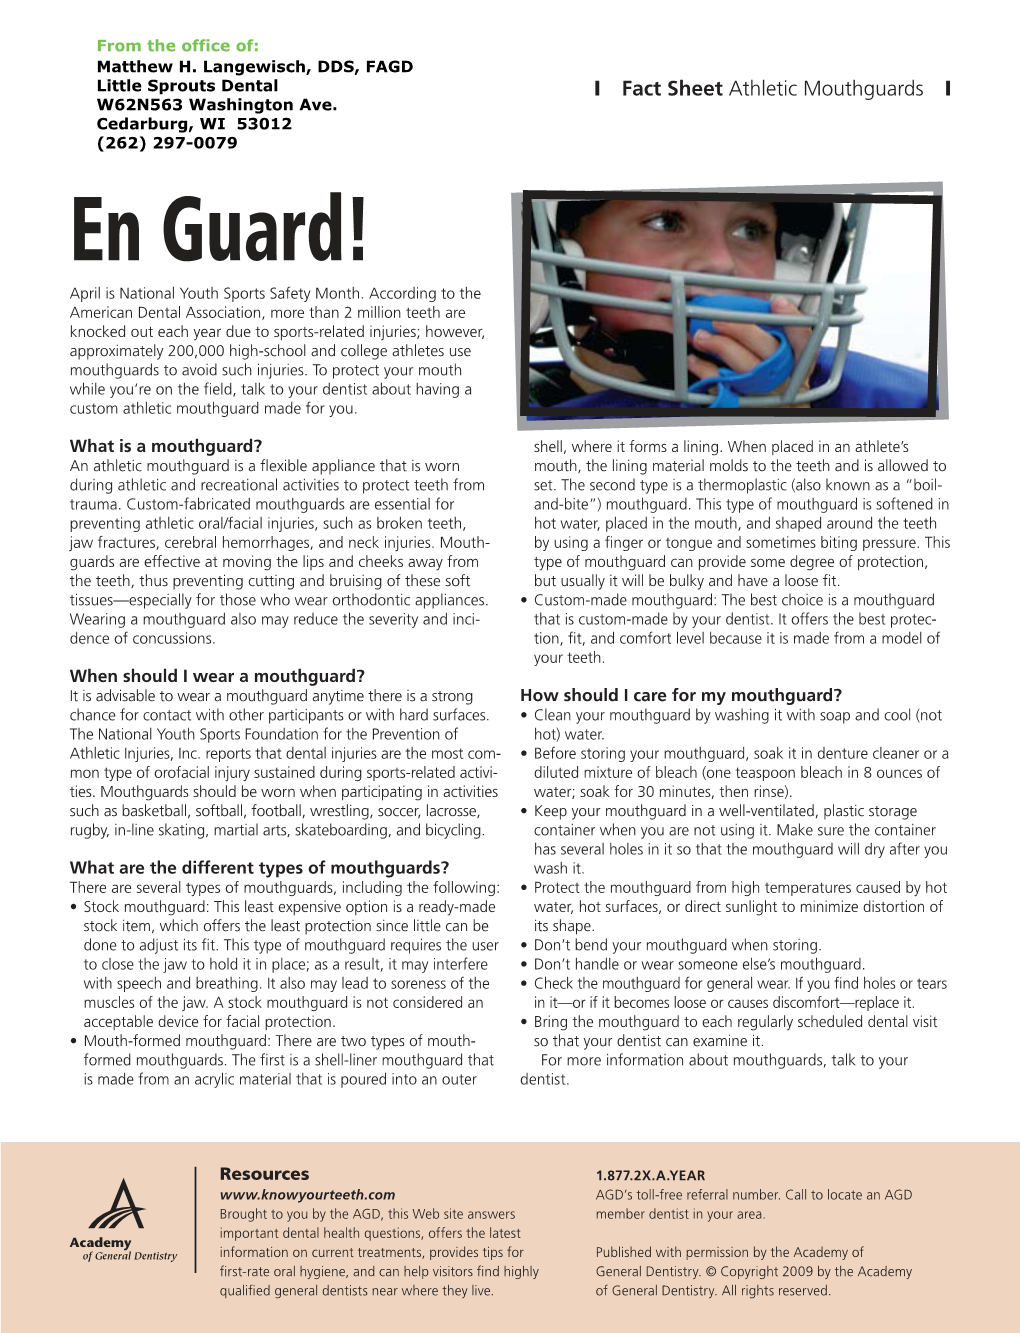 Athletic Mouthguard Fact Sheet